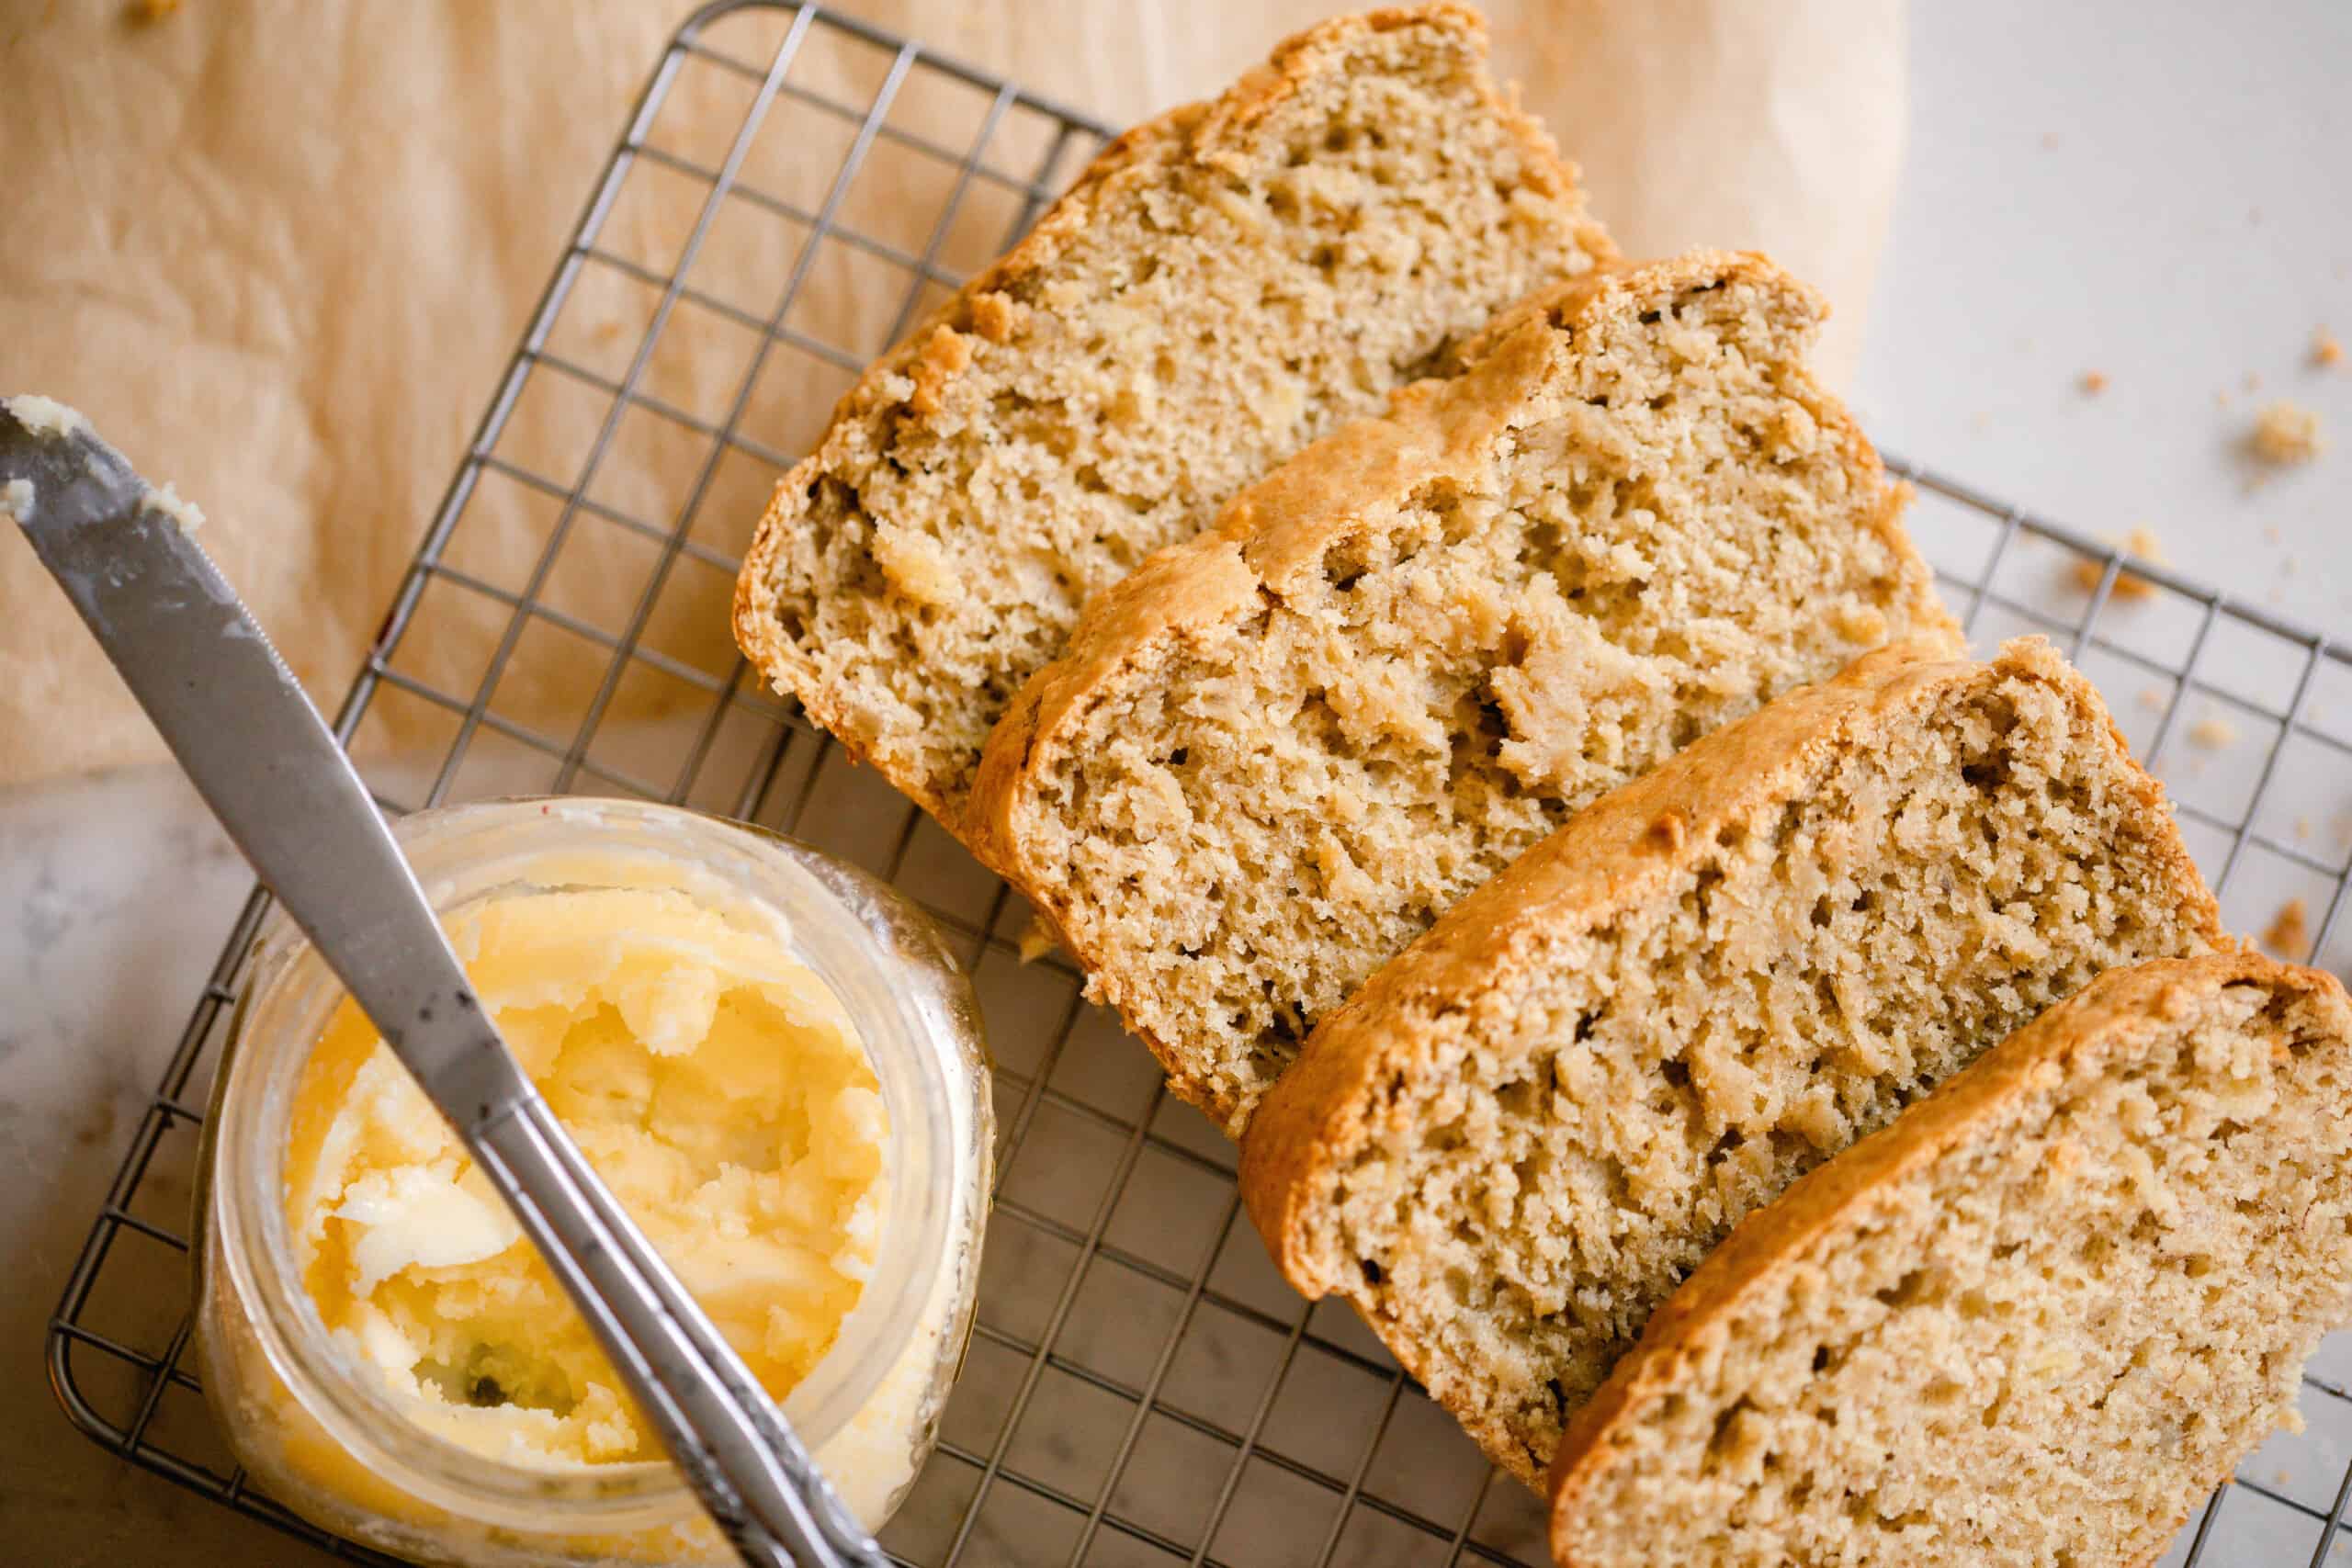 Easy Sourdough Bread Recipe: Step by Step Photos - Modern Farmhouse Eats